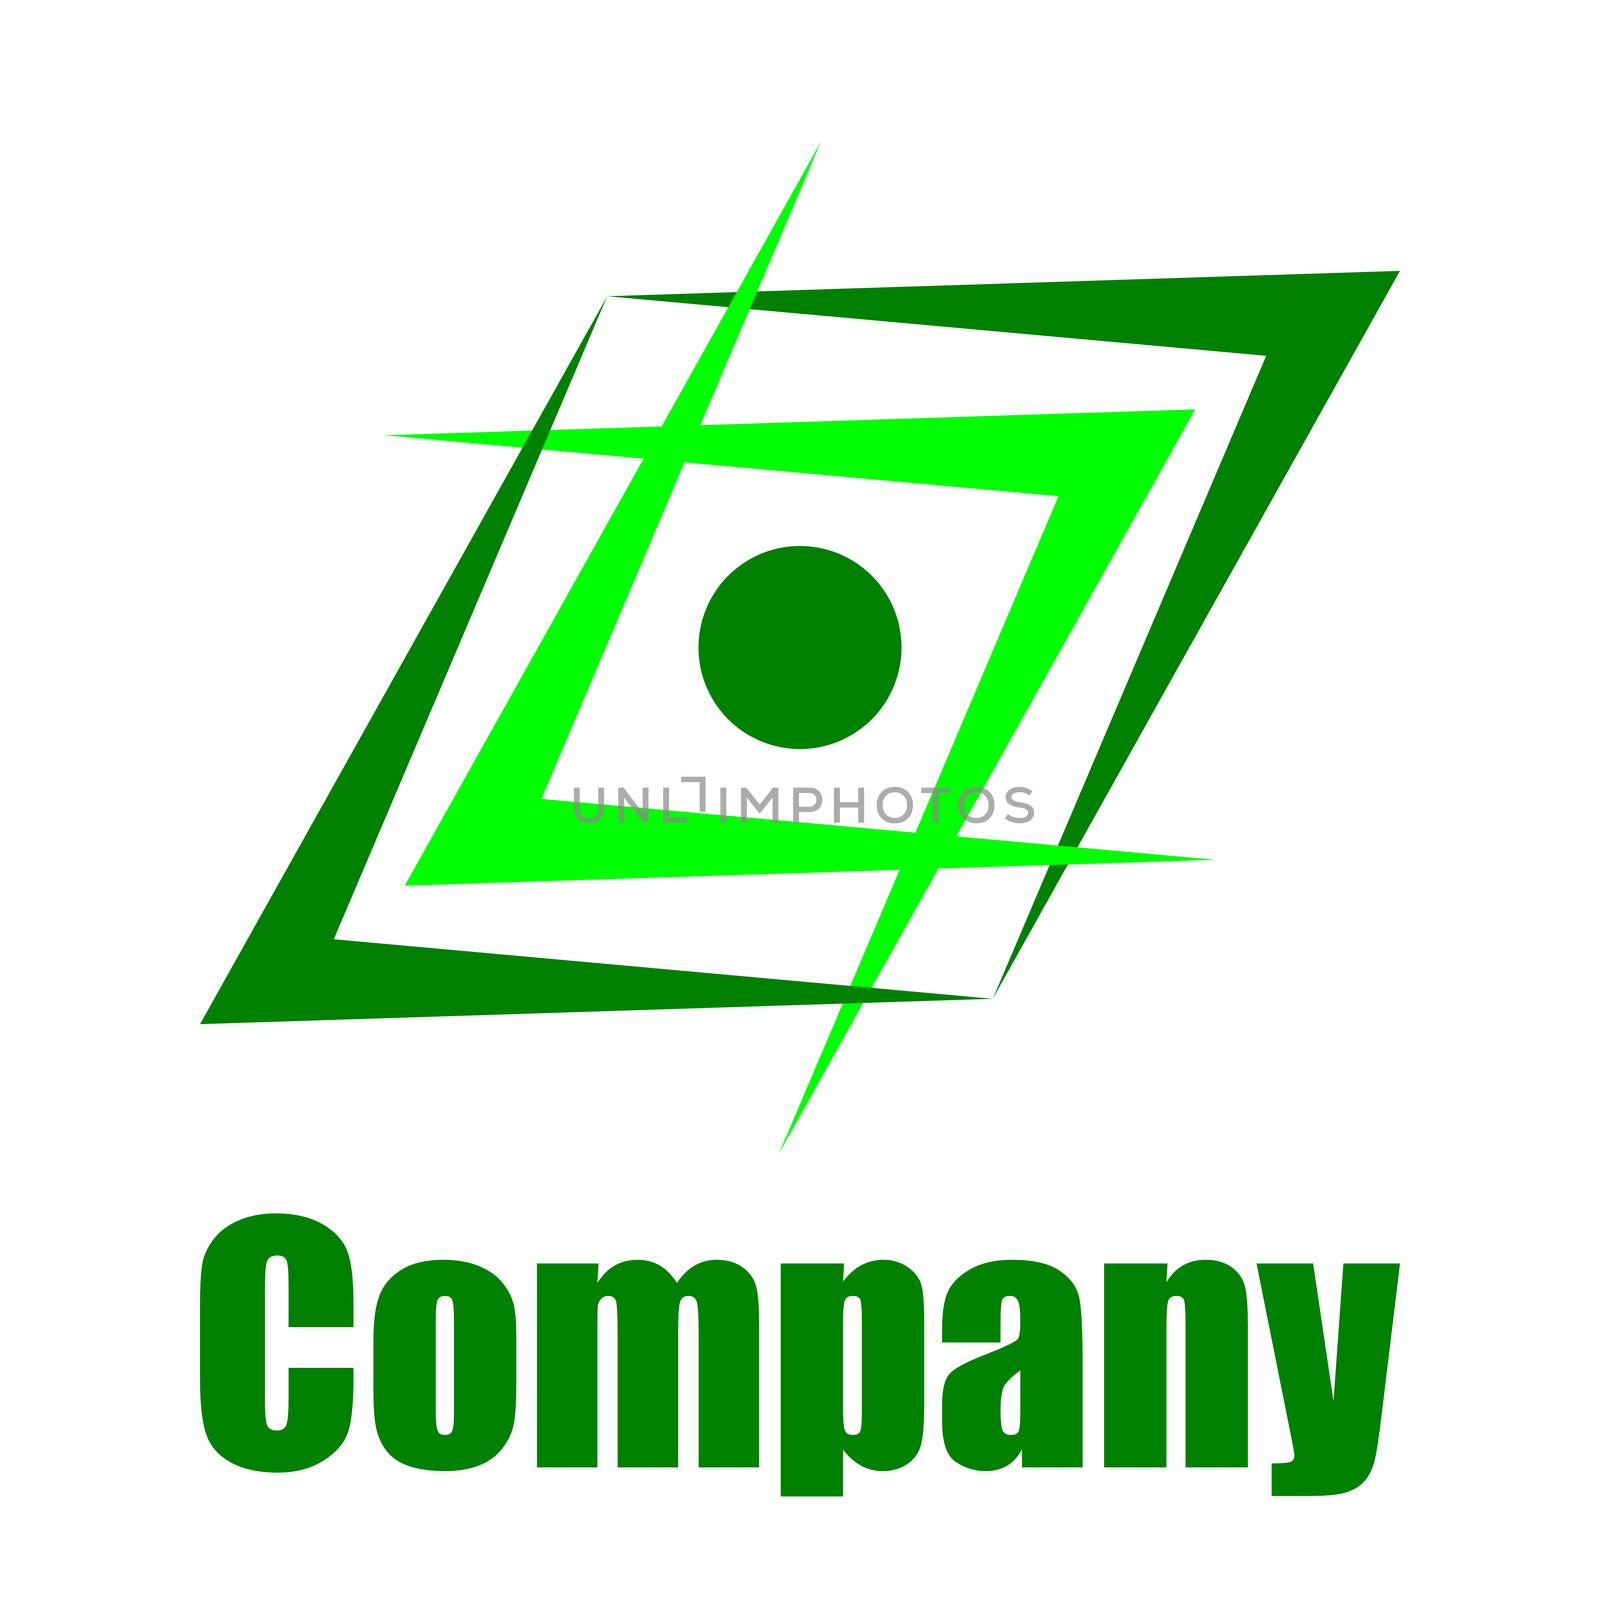 green environmental company logo by alexwhite